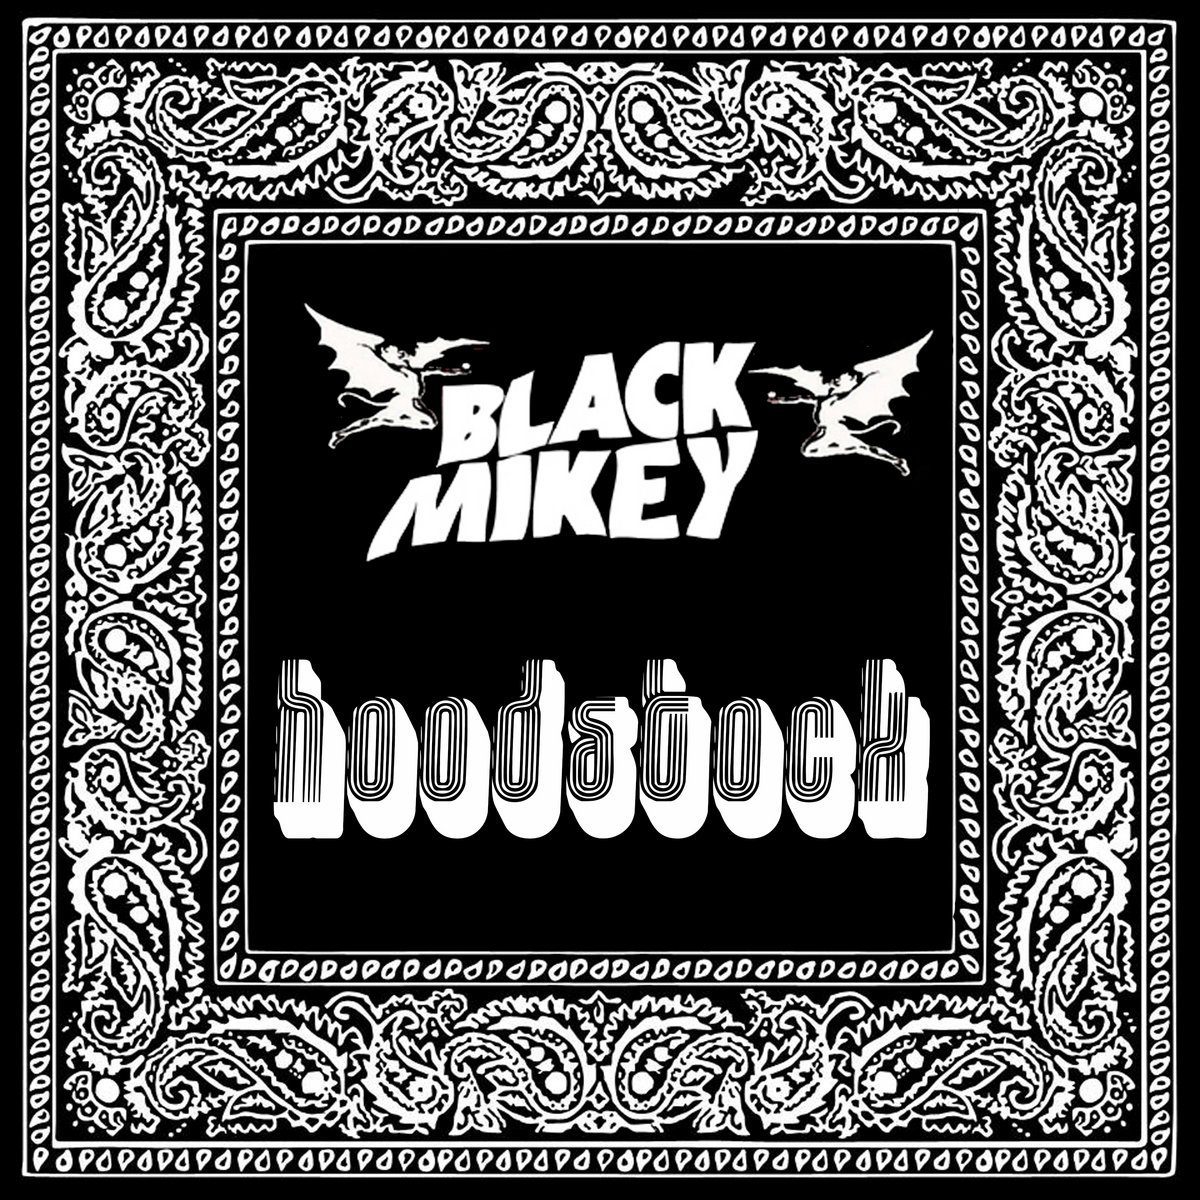 Black Mikey - Hoodstock